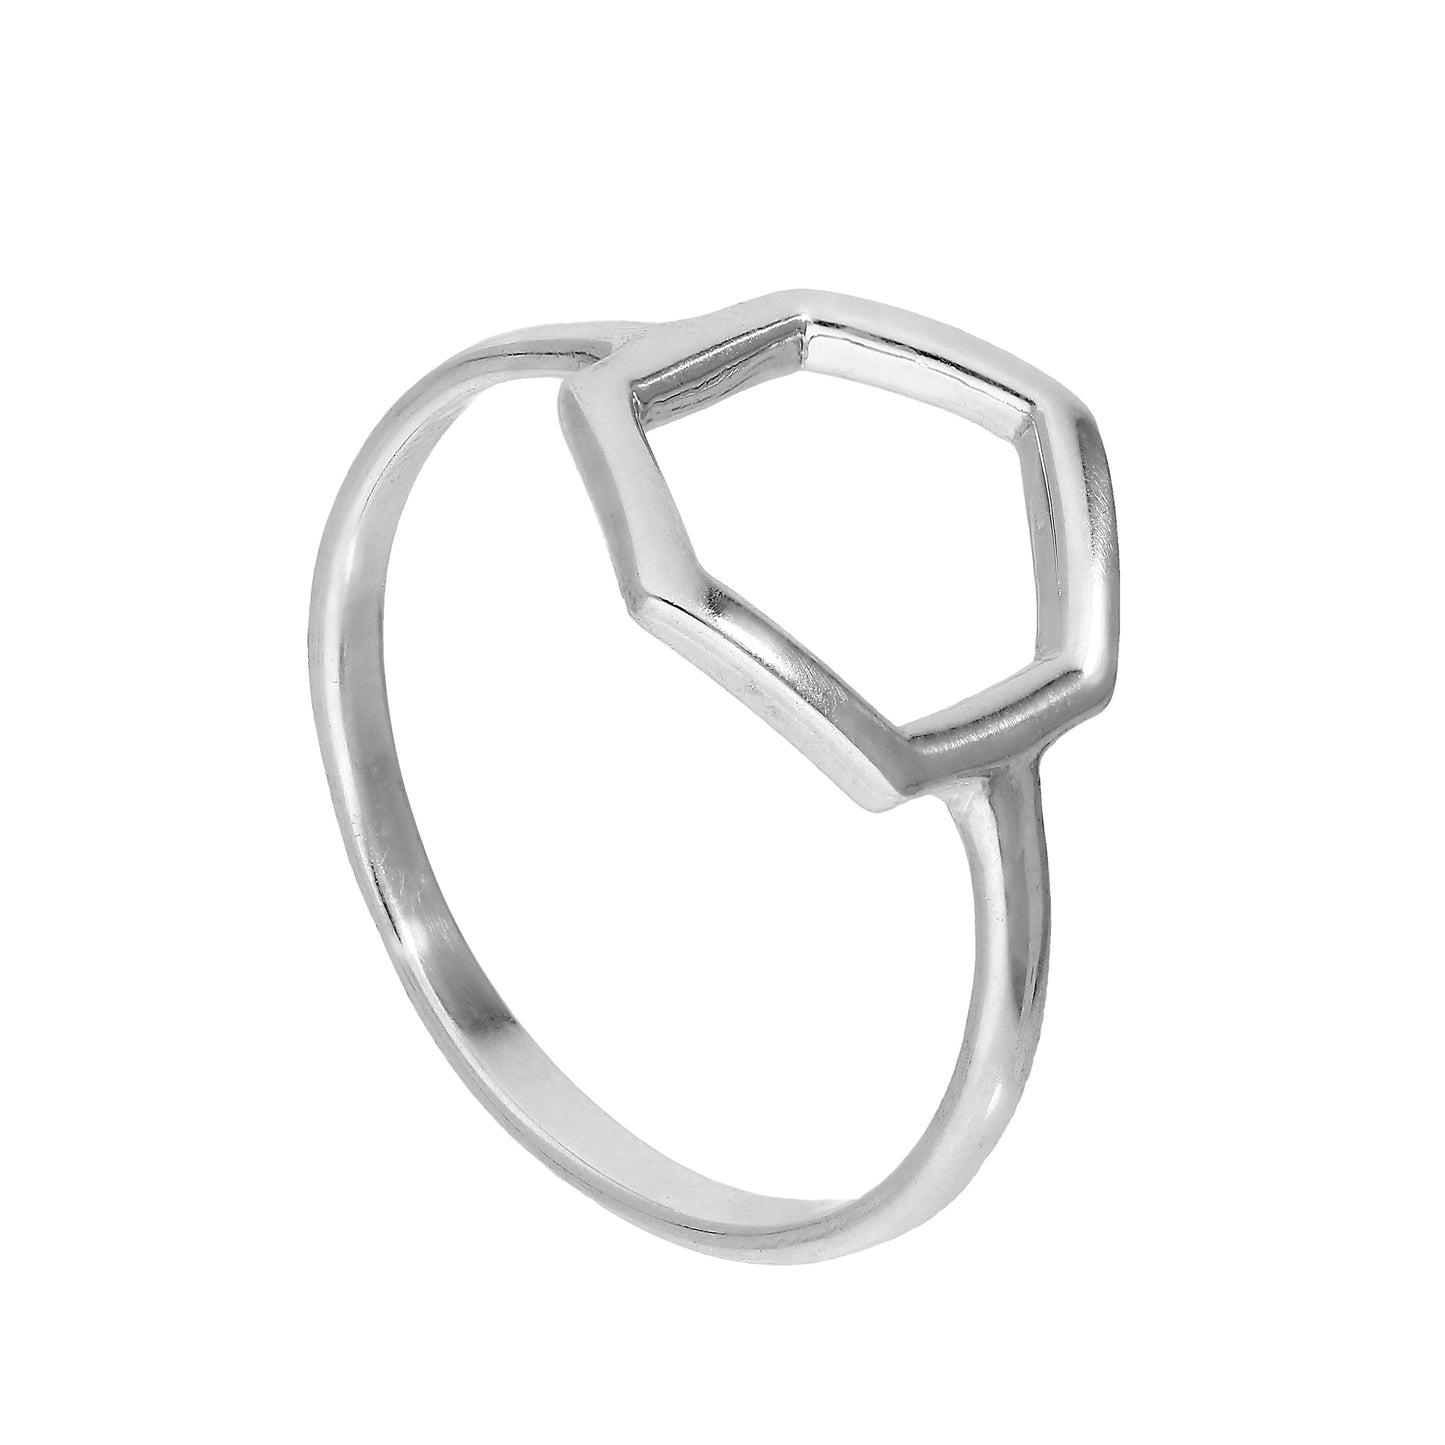 Sterling Silver Large Open Hexagon Ring Sizes J - V